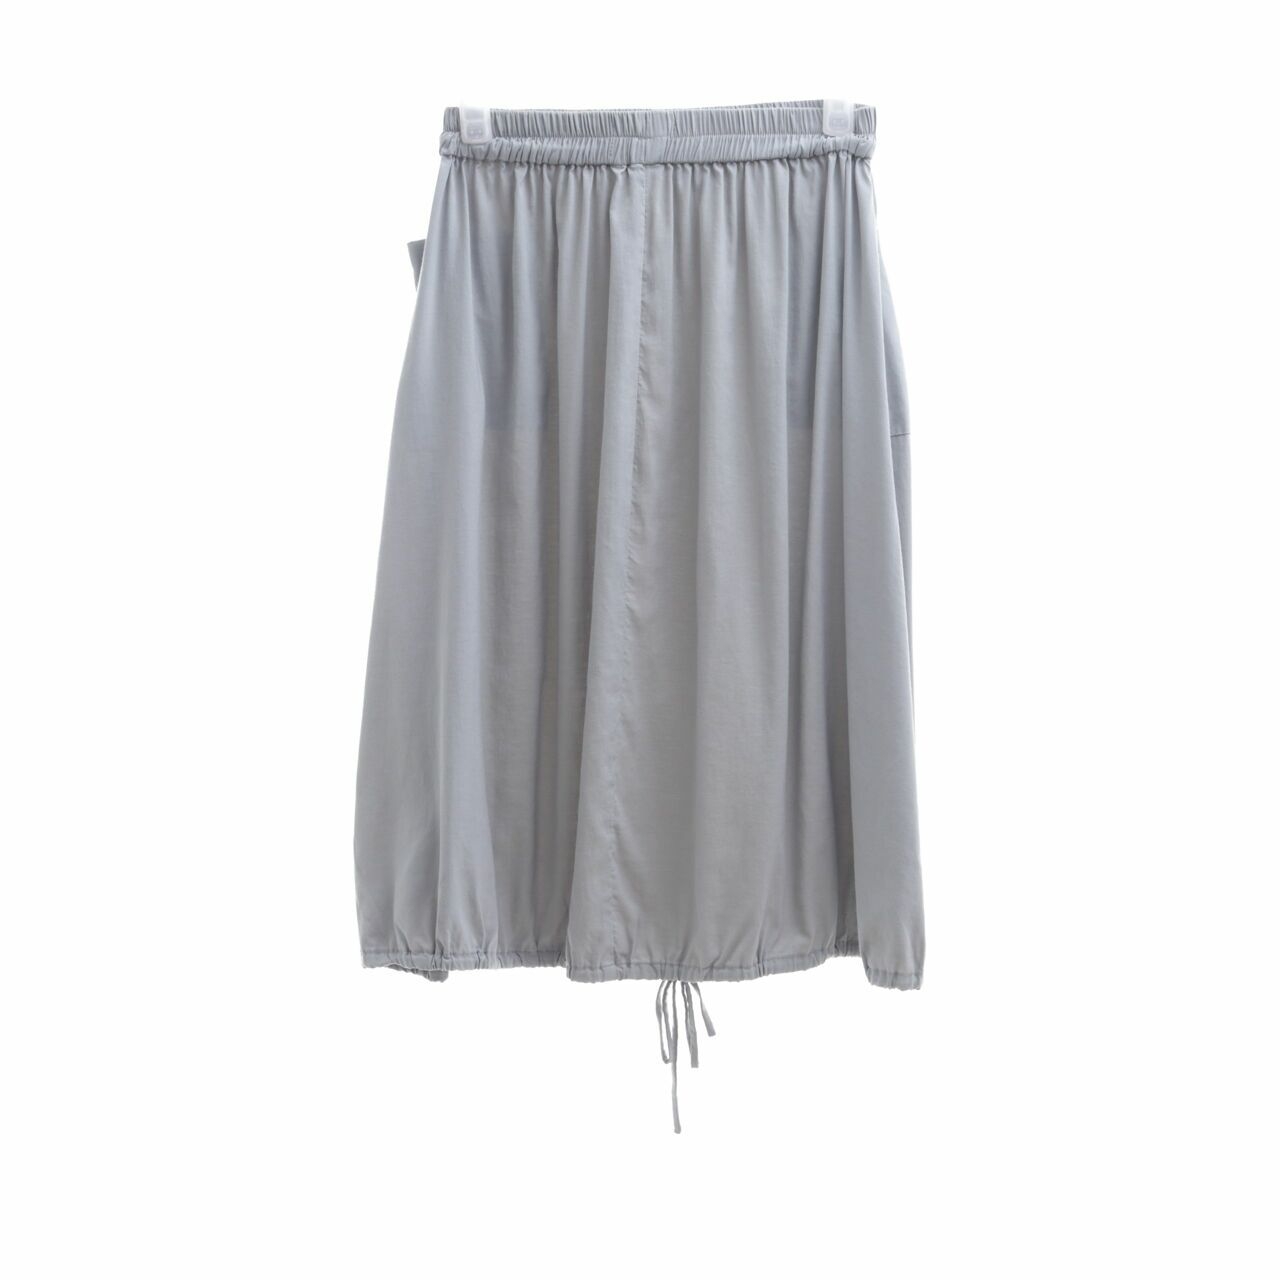 Maen Kaen Grey Mini Skirt